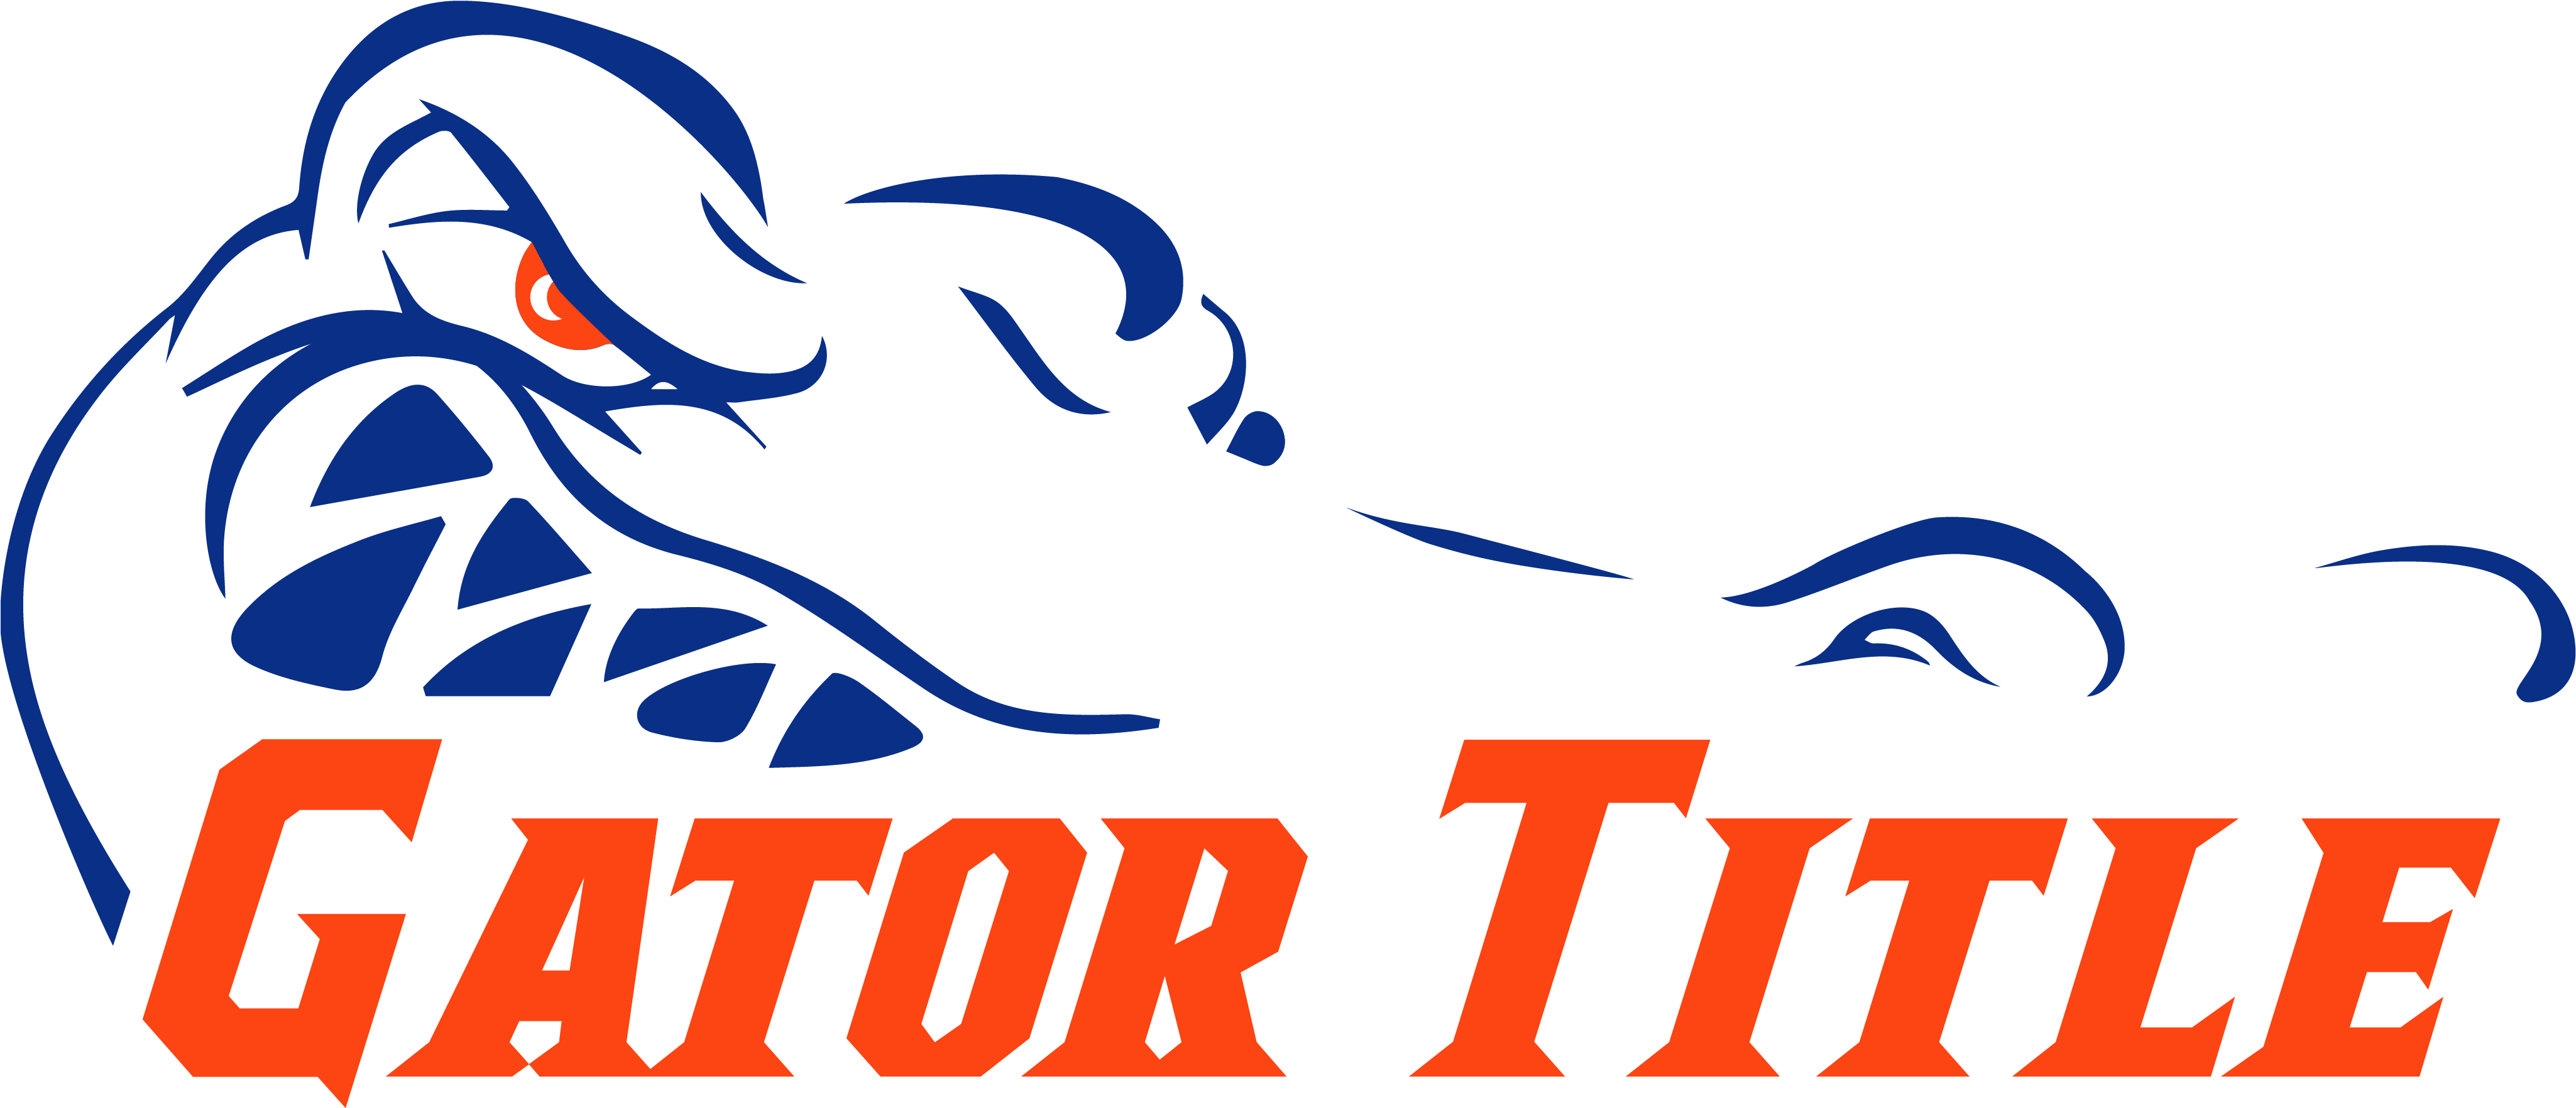 Florida Gators Football (4133x2125)